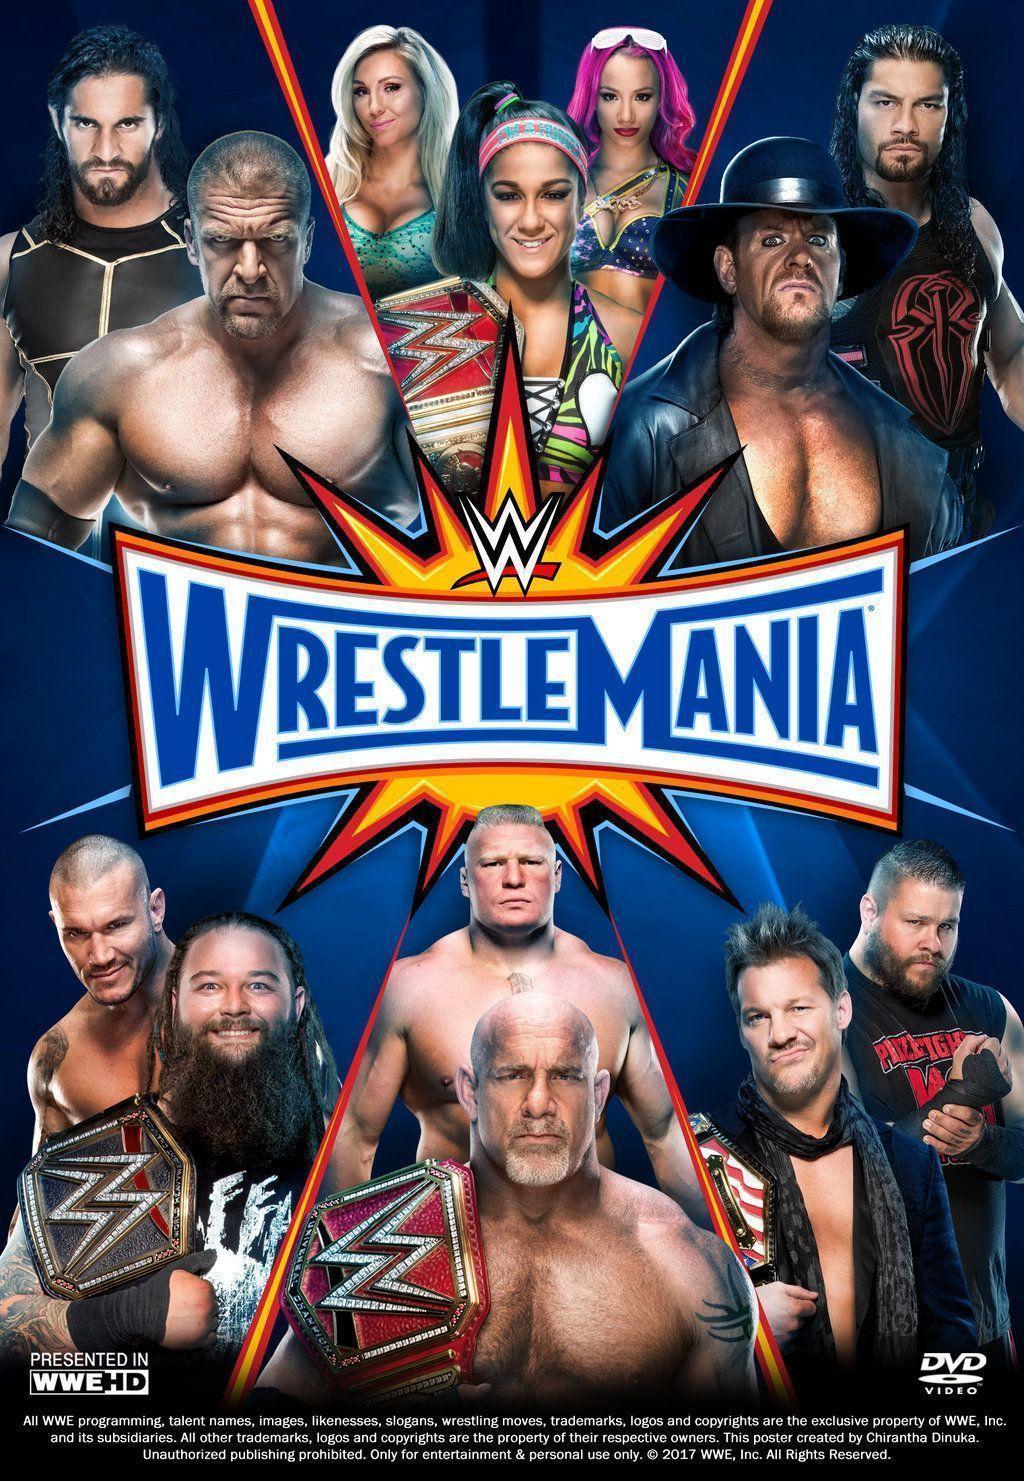 WWE Wrestlemania 33 Wallpaper Free Download From Hdwallpaperz.tk